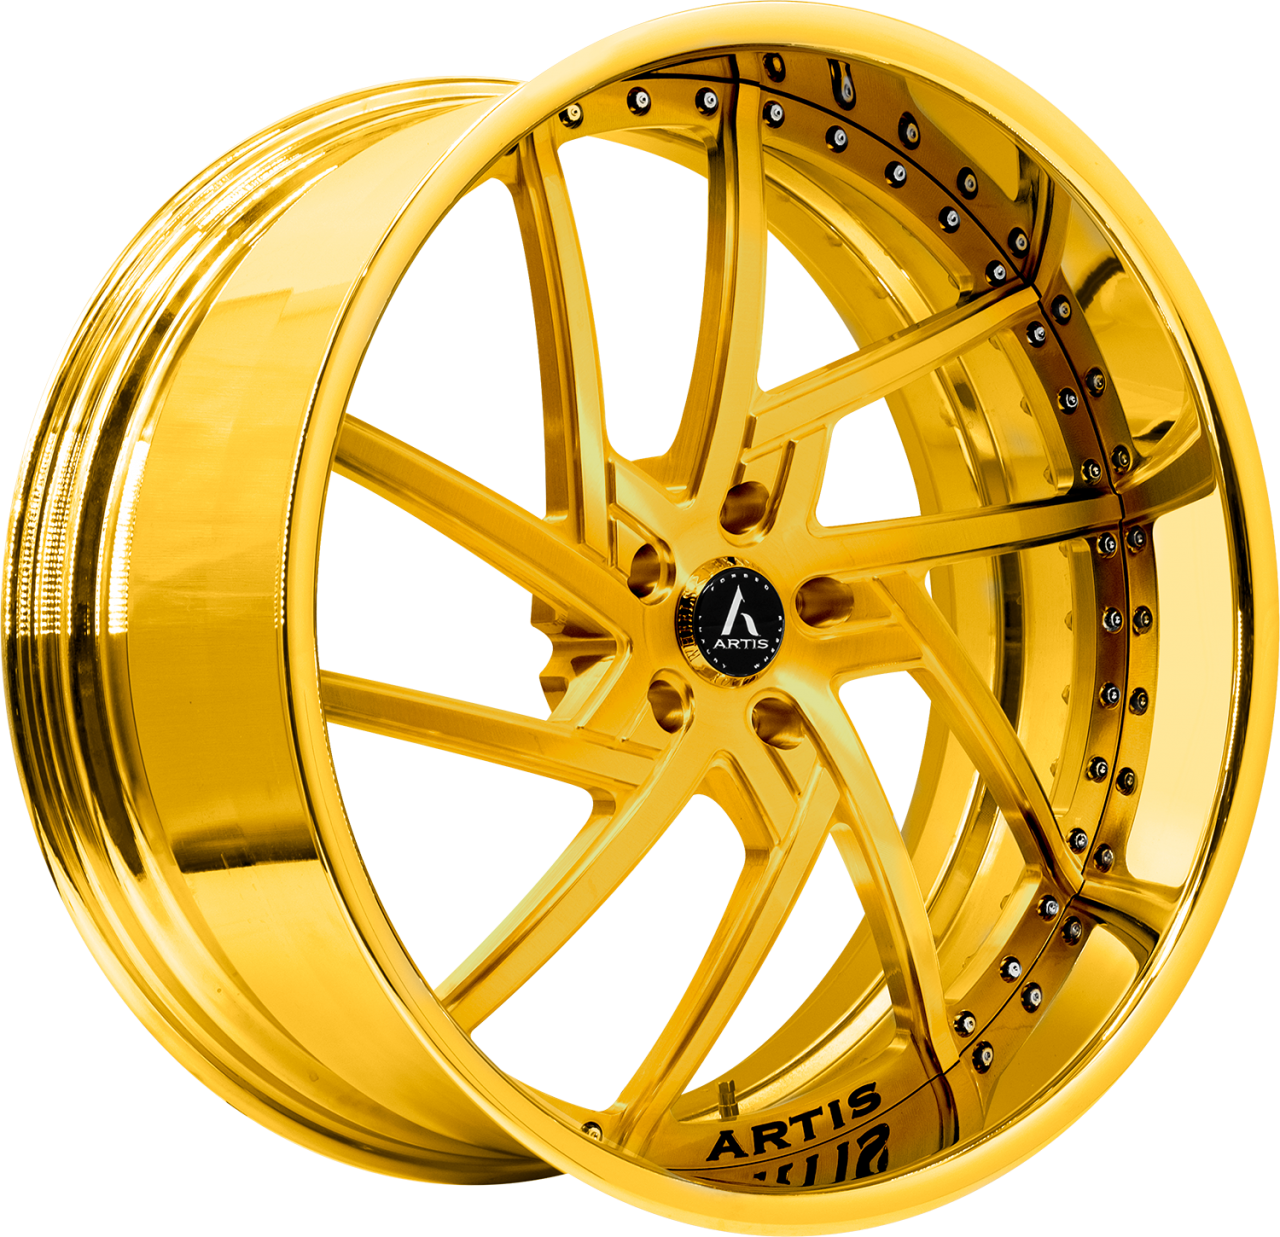 Artis Forged Fairfax wheel with Gold Finish finish